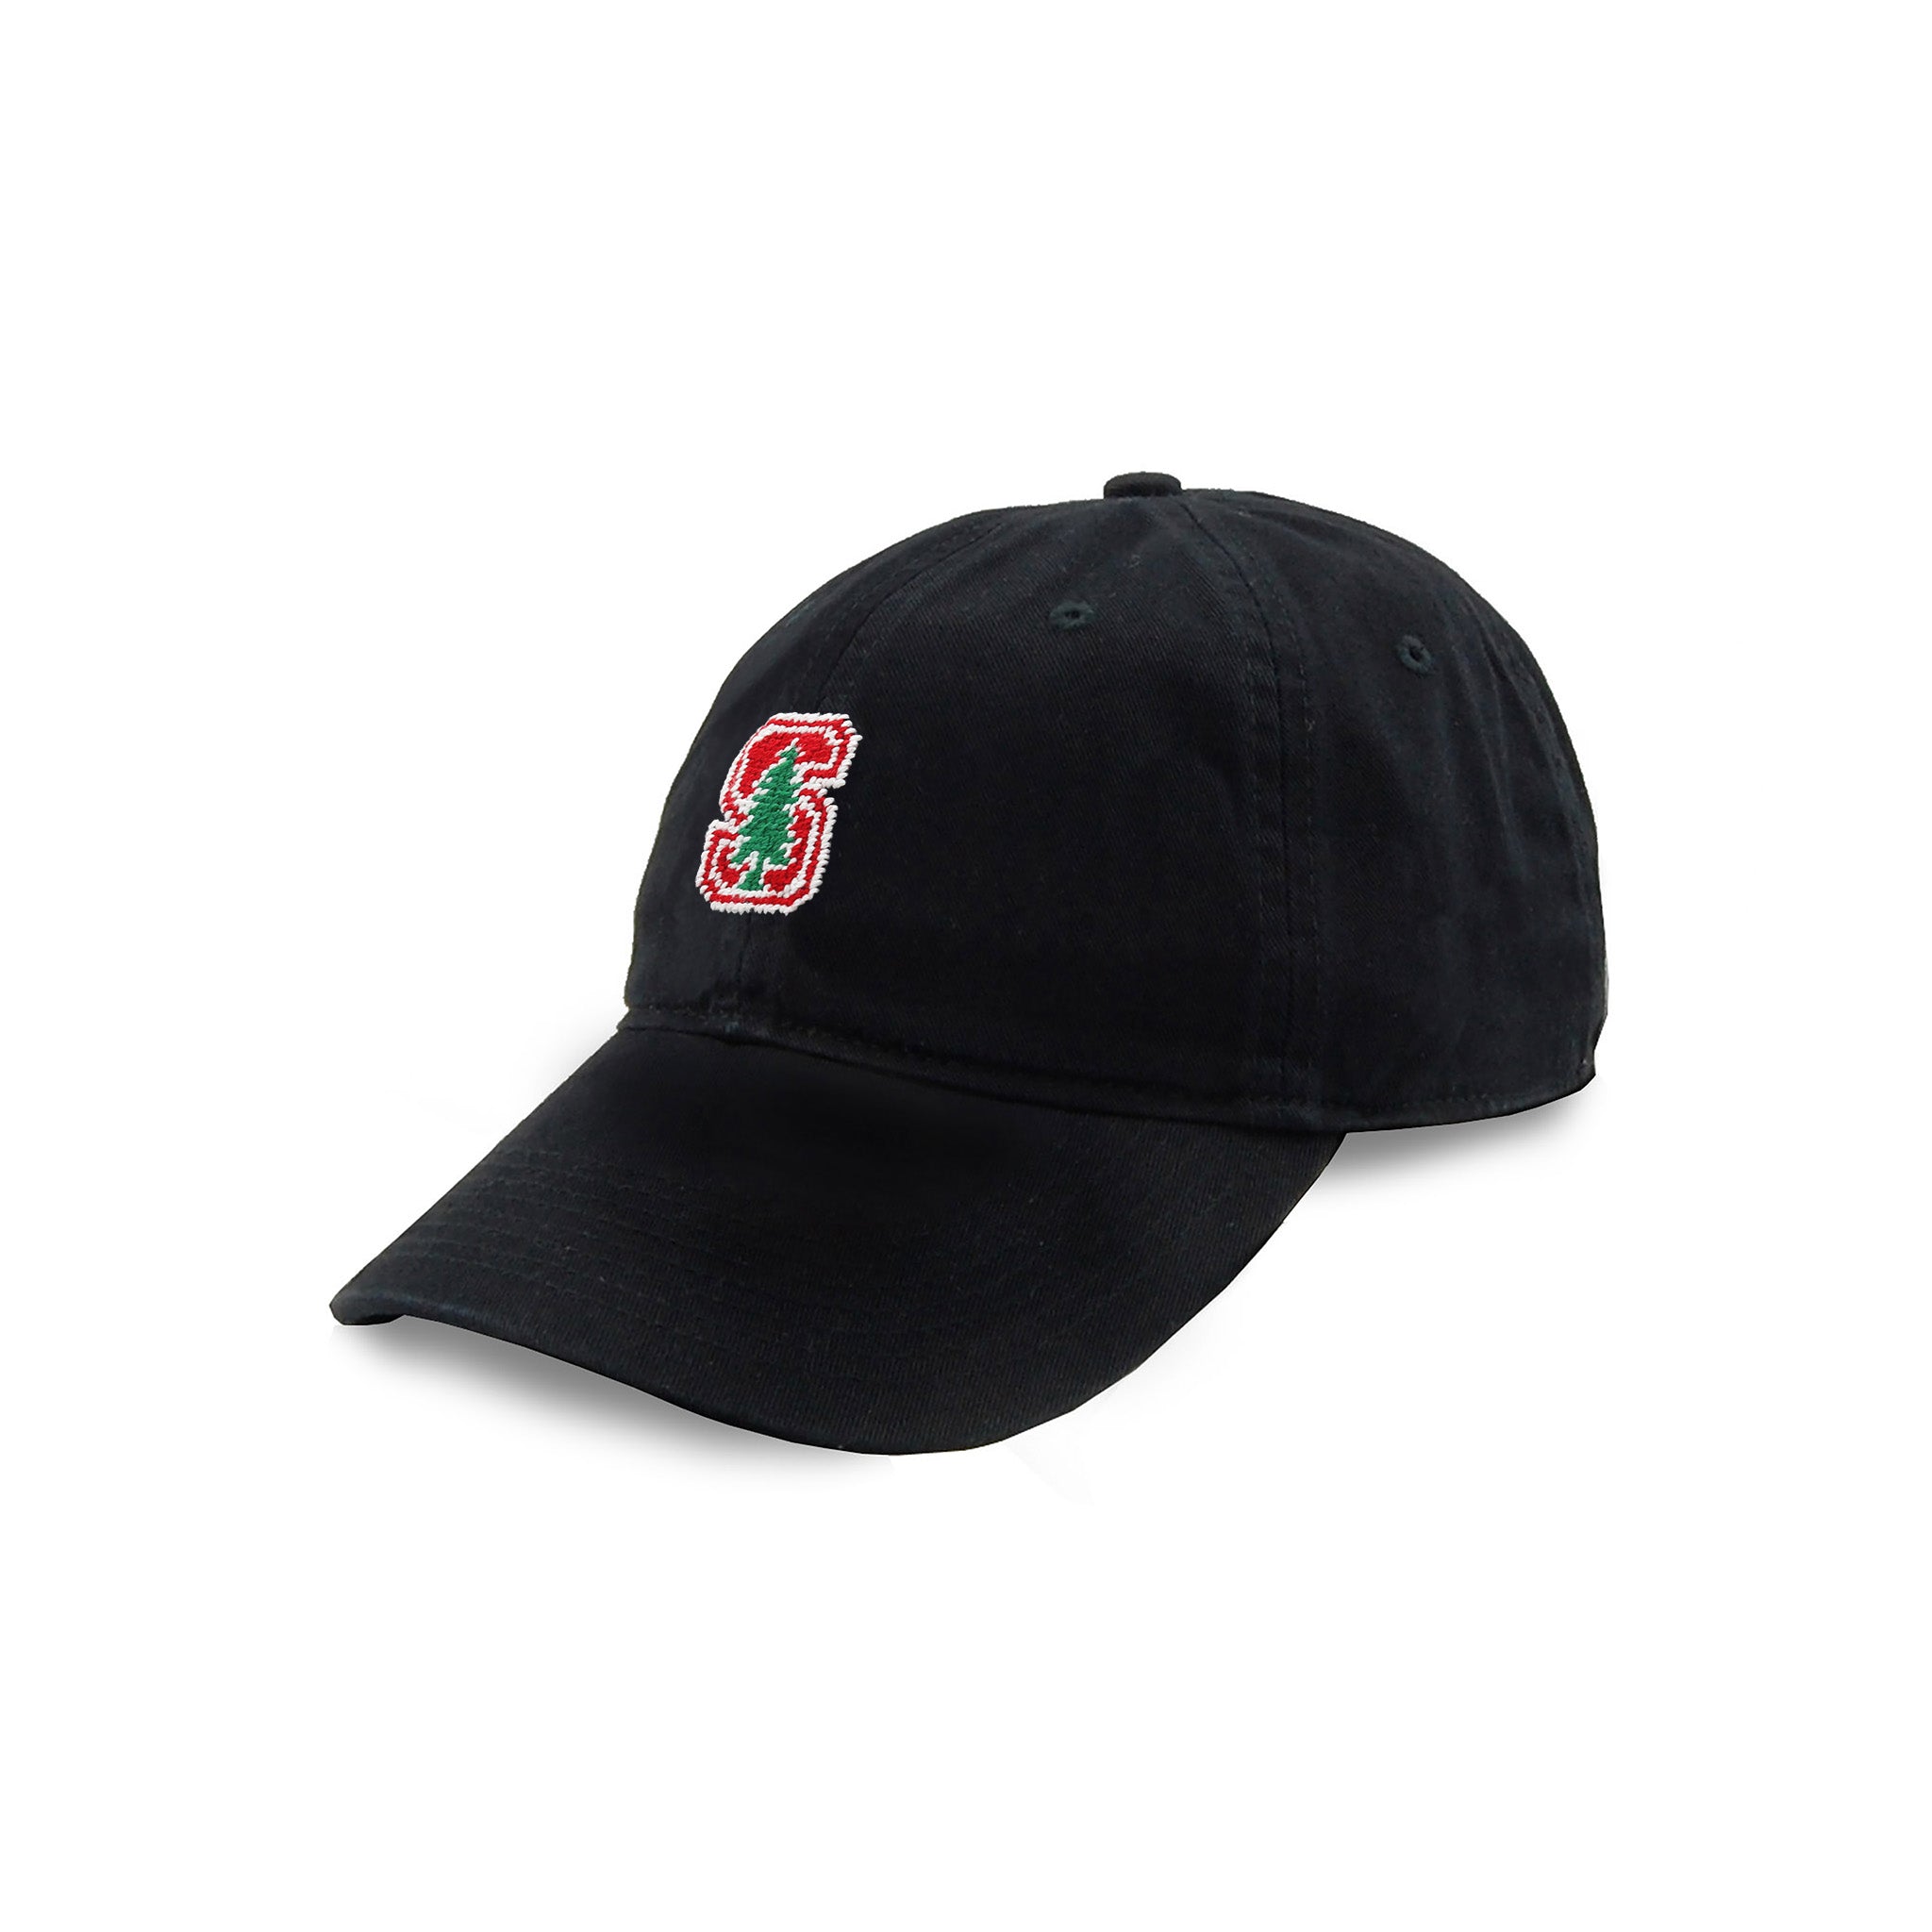 Stanford Hat (Black)